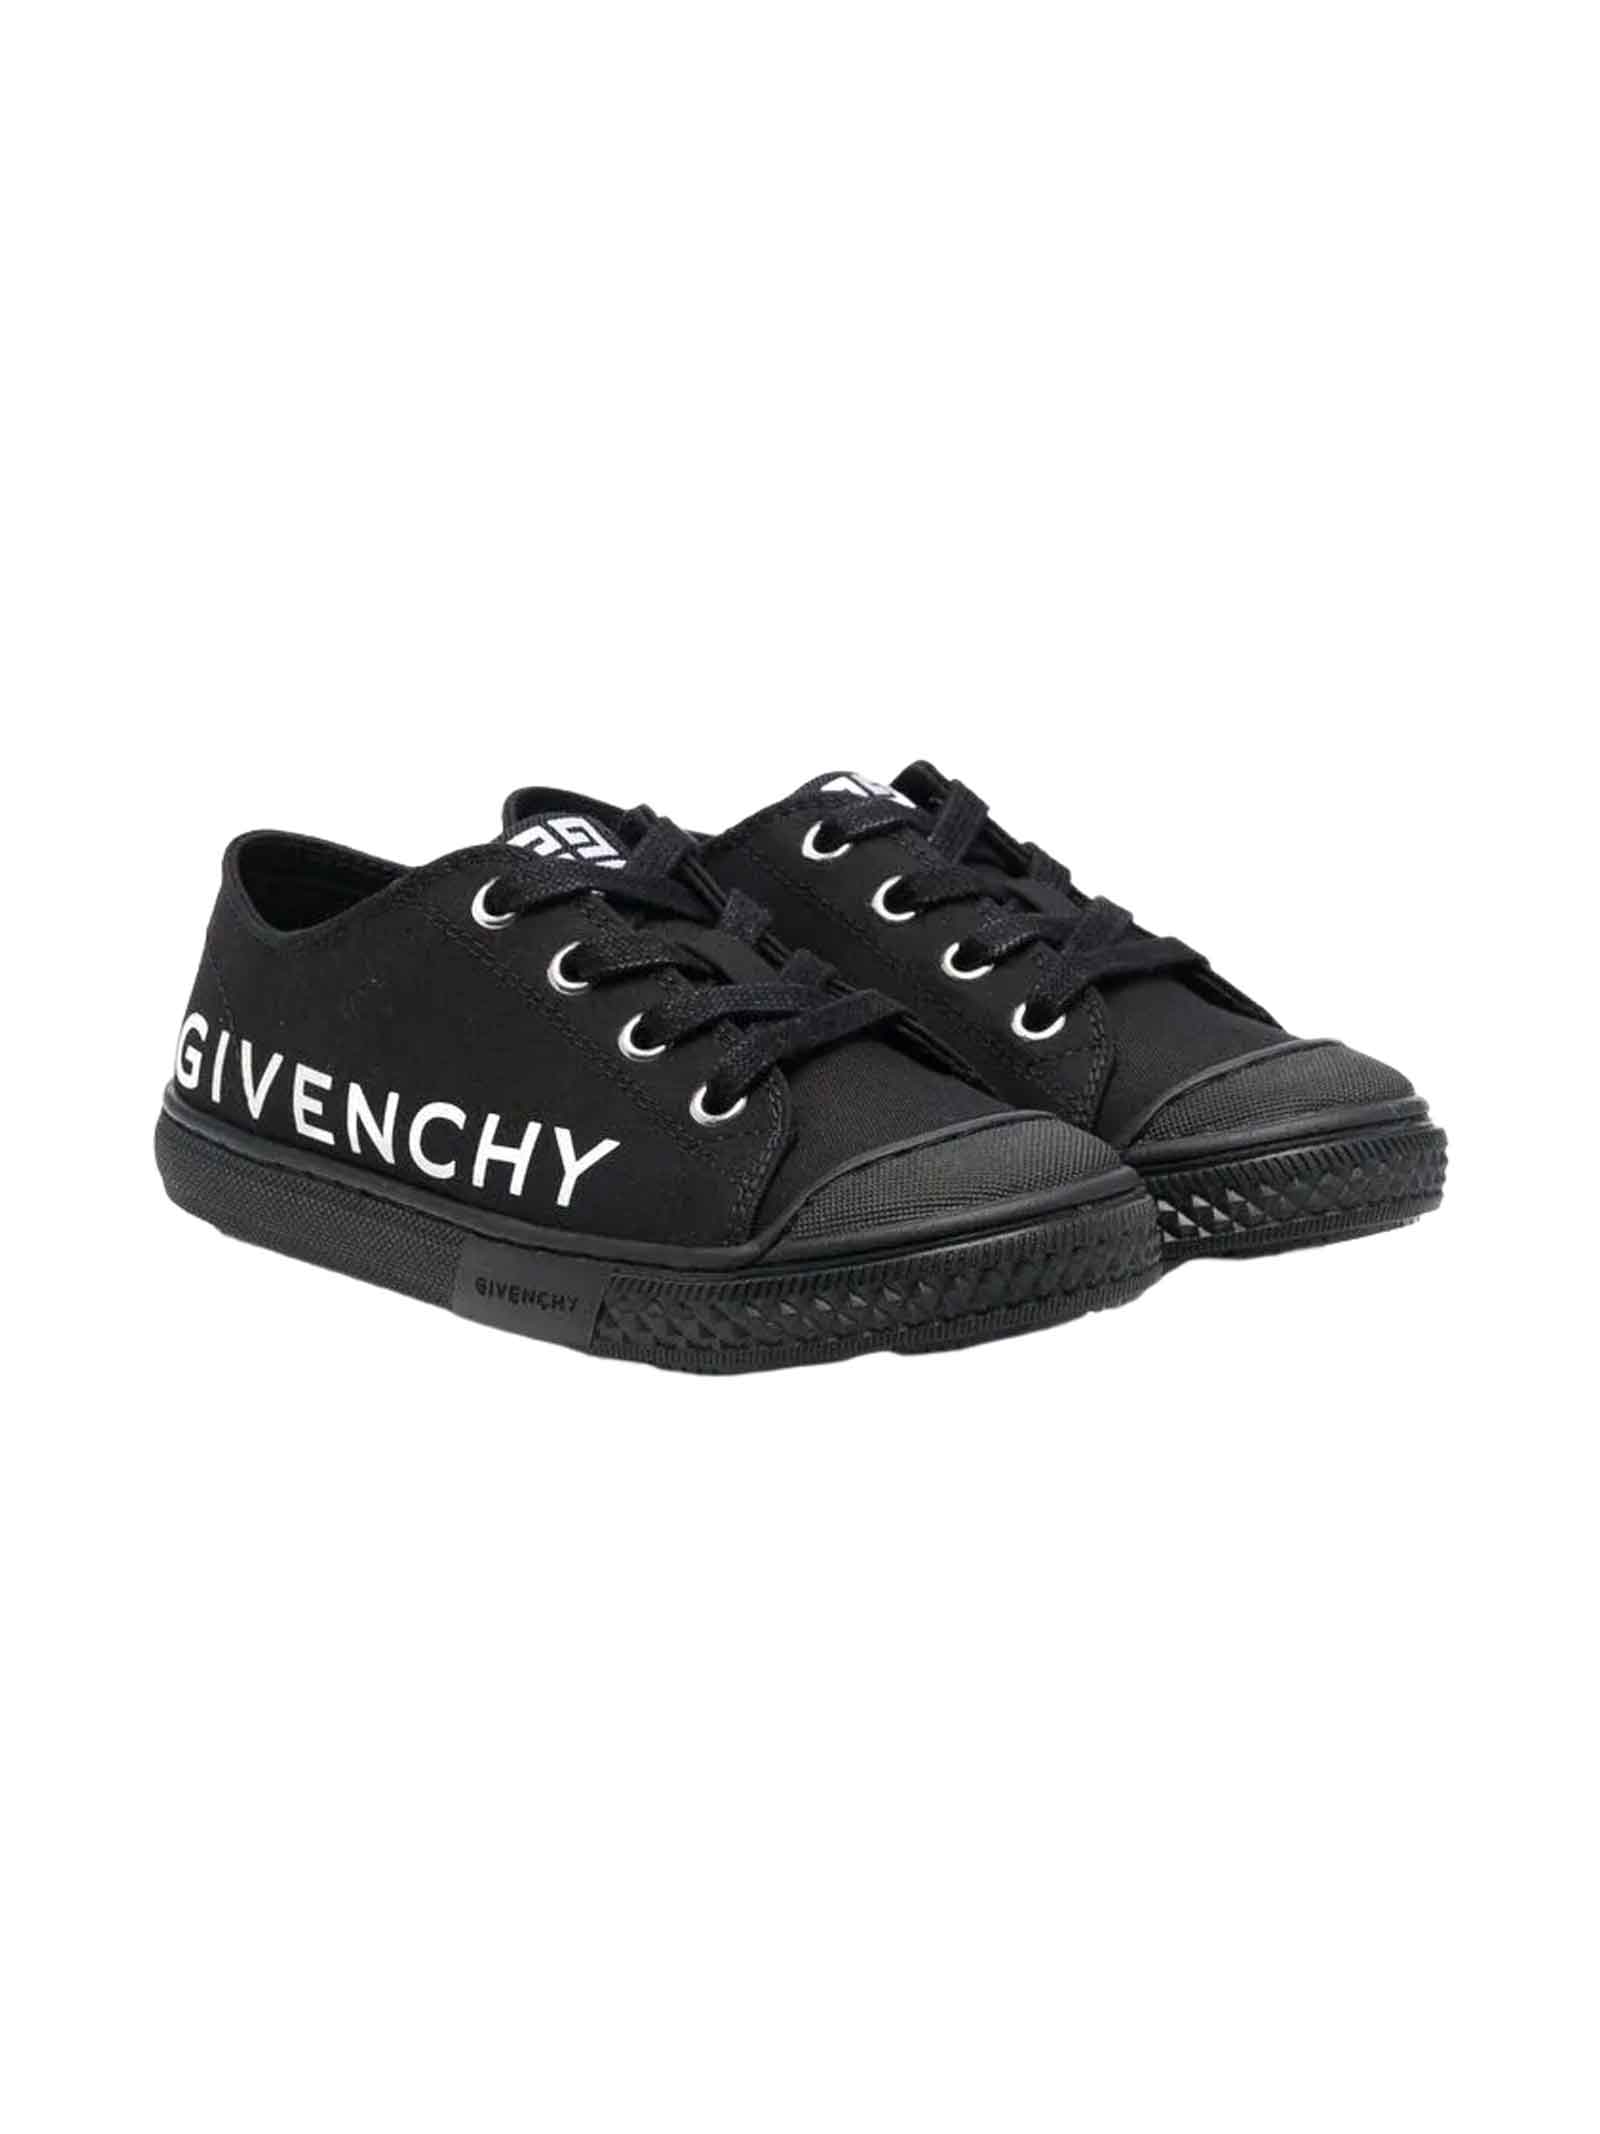 Givenchy Black Shoes Boy